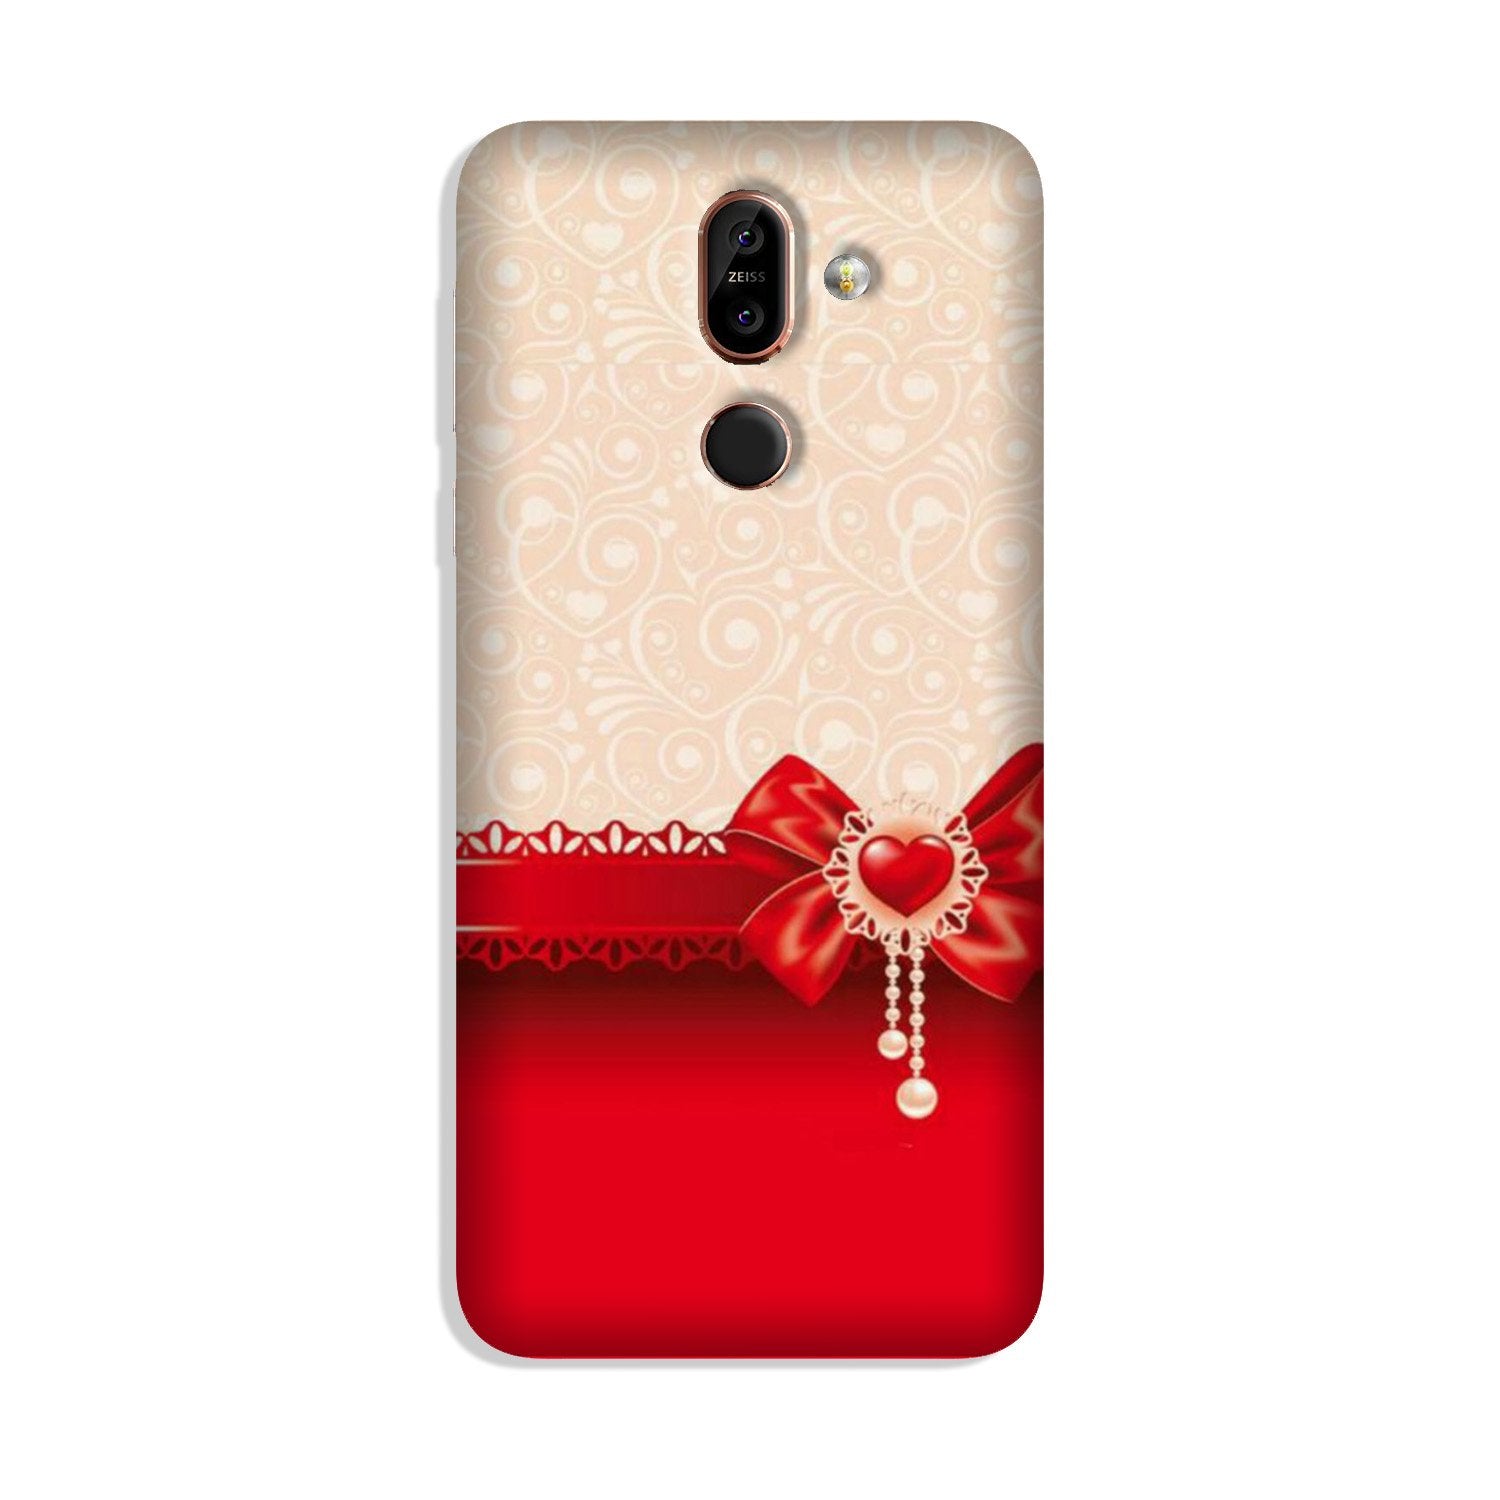 Gift Wrap3 Case for Nokia 8.1